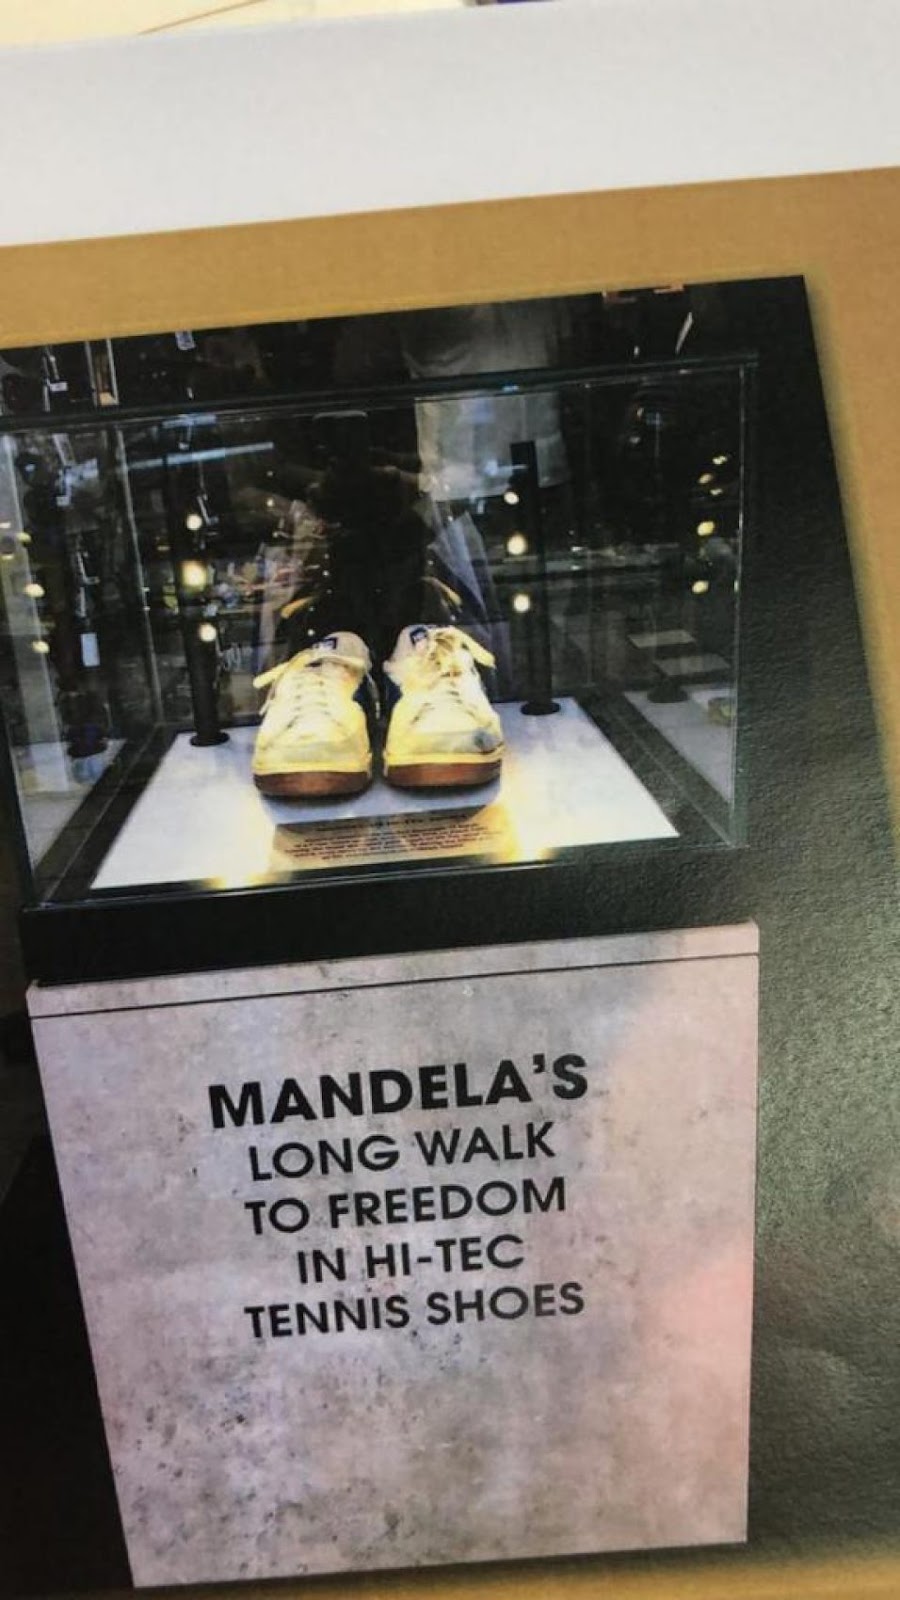 Nelson Mandela's shoes are back in SA - Hi-Tec